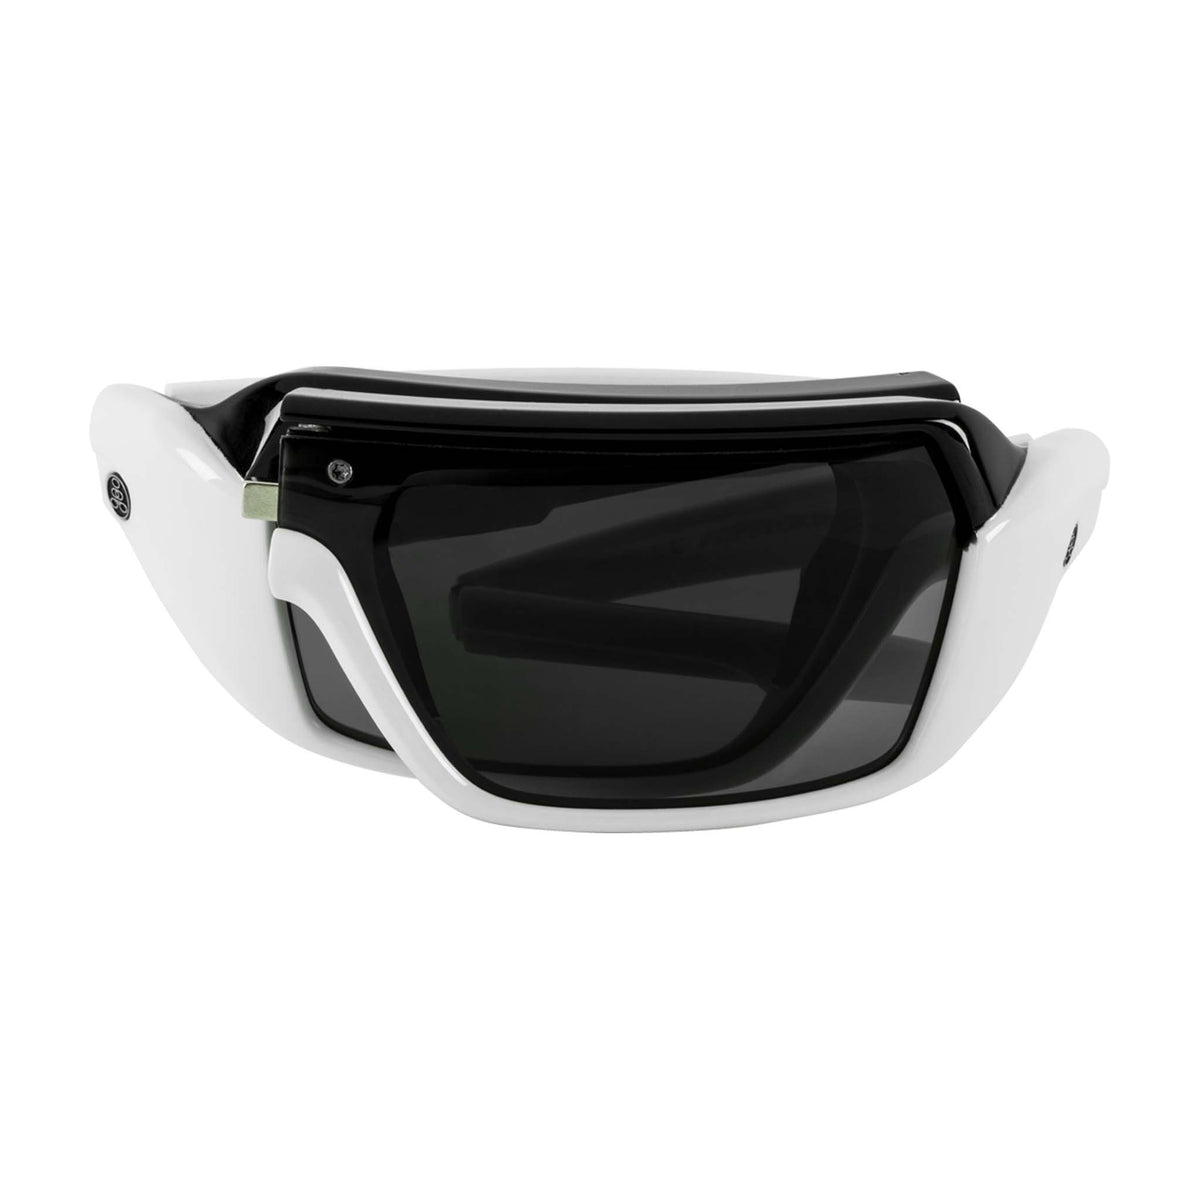 Popticals, Premium Compact Sunglasses, PopStorm, 010060-RBGP, Polarized Sunglasses, Gloss Black/Red Frame, Gray Lenses, Compact View